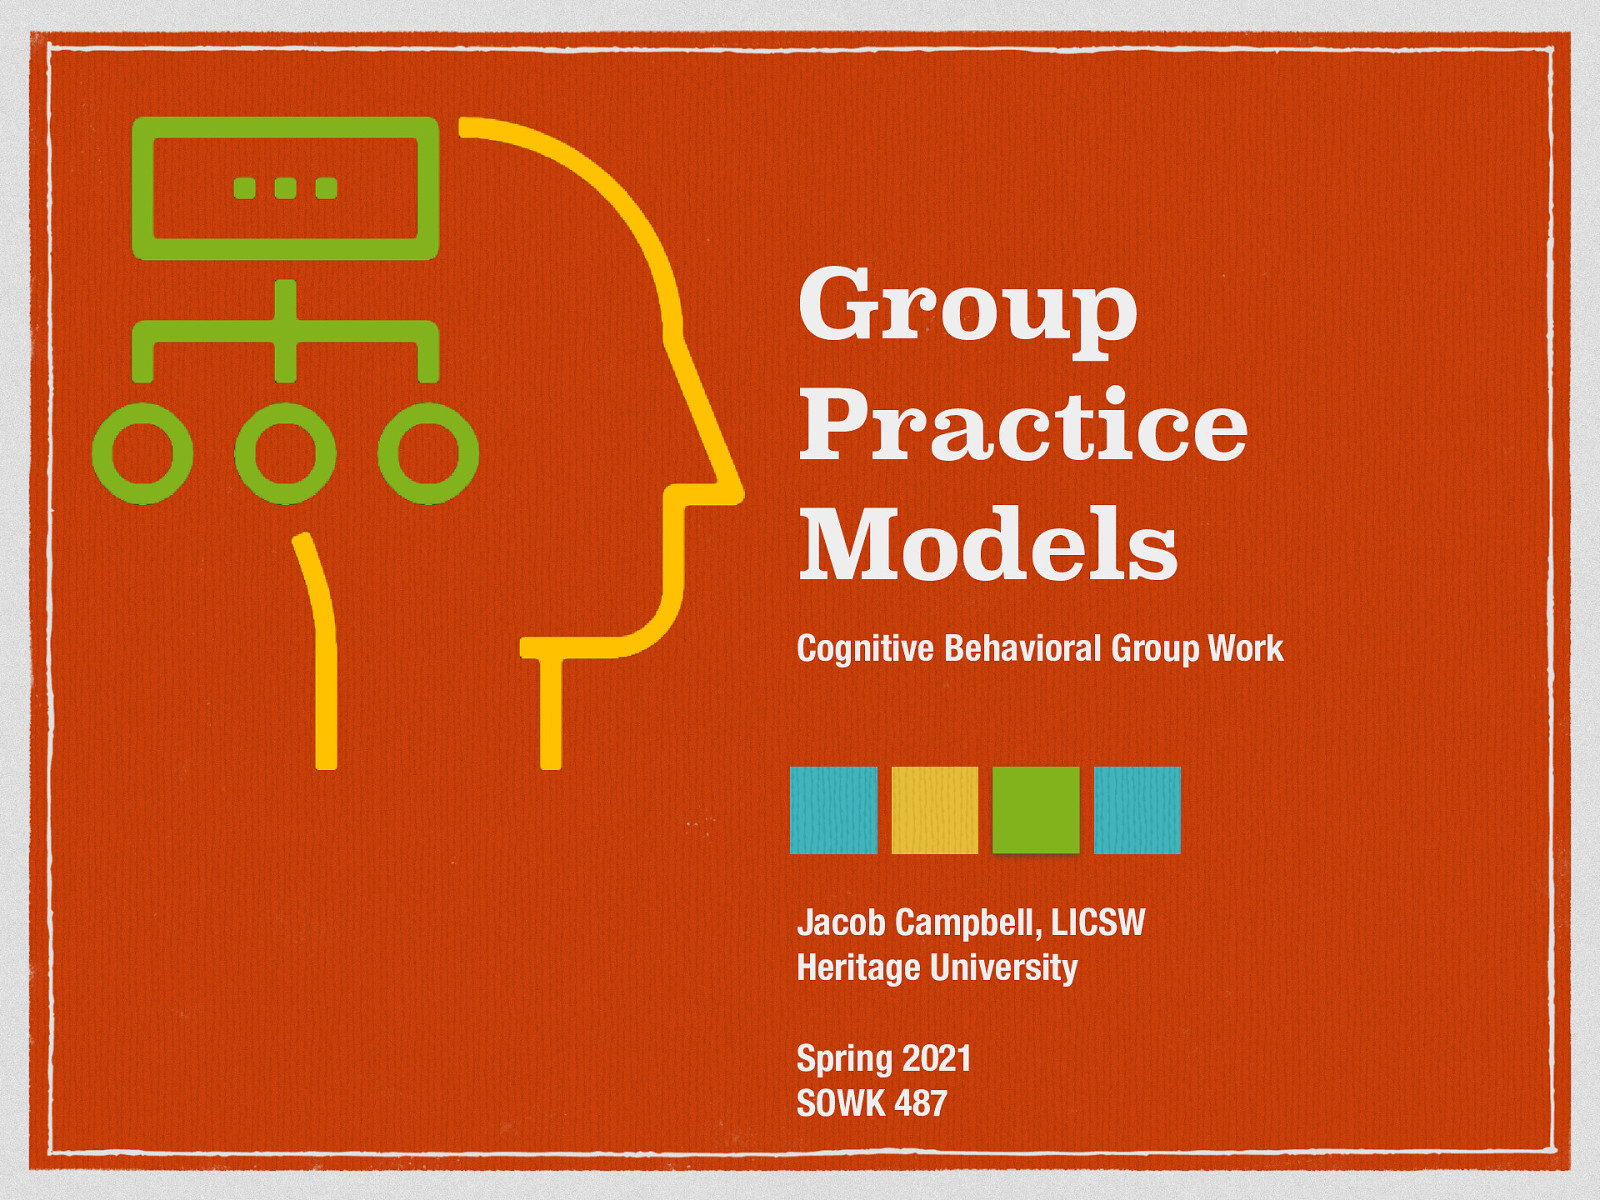 SOWK 487 - Week 07 - Group Practice Models - Cognitive Behavioral Group Work